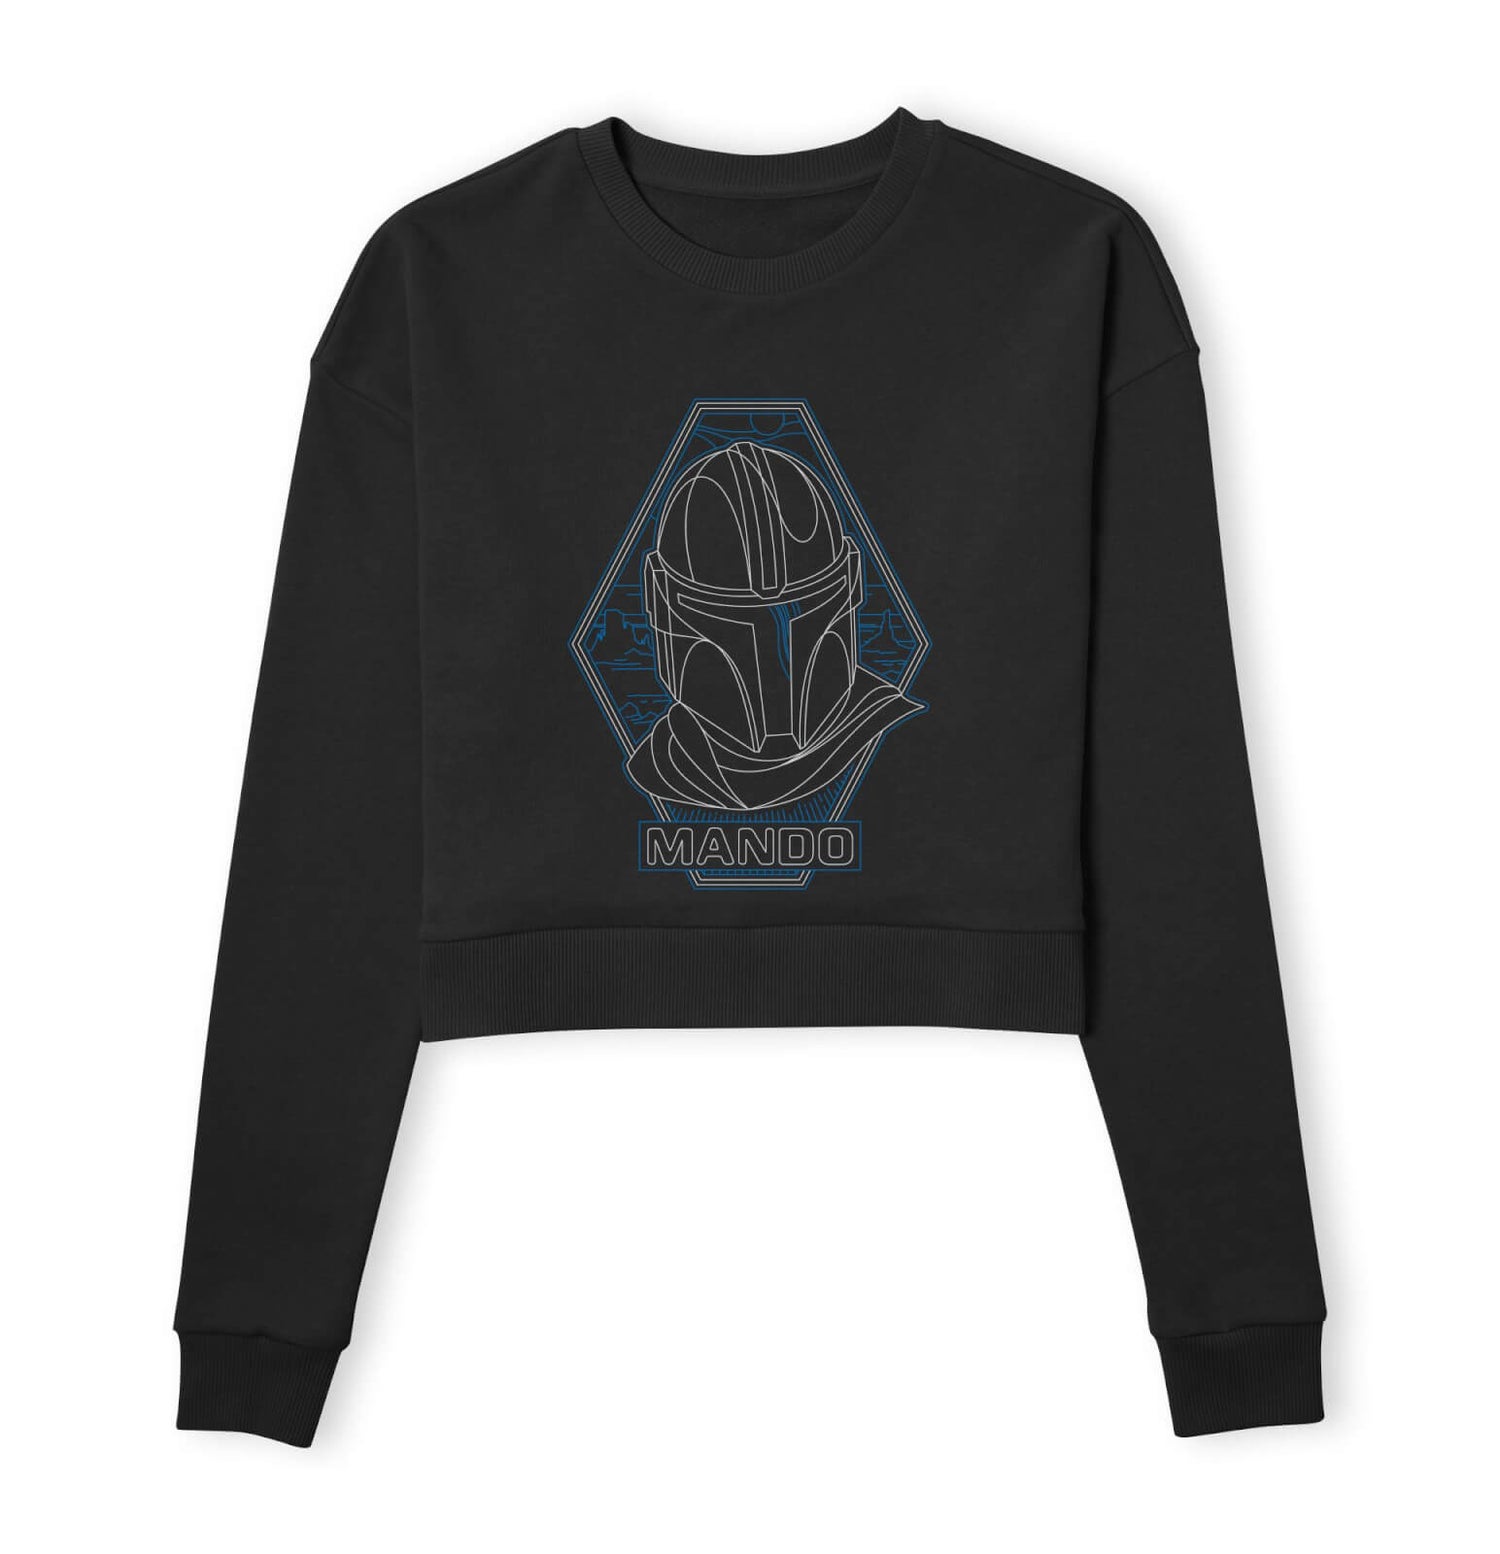 Star Wars The Mandalorian Mando Line Art Badge Women's Cropped Sweatshirt - Black